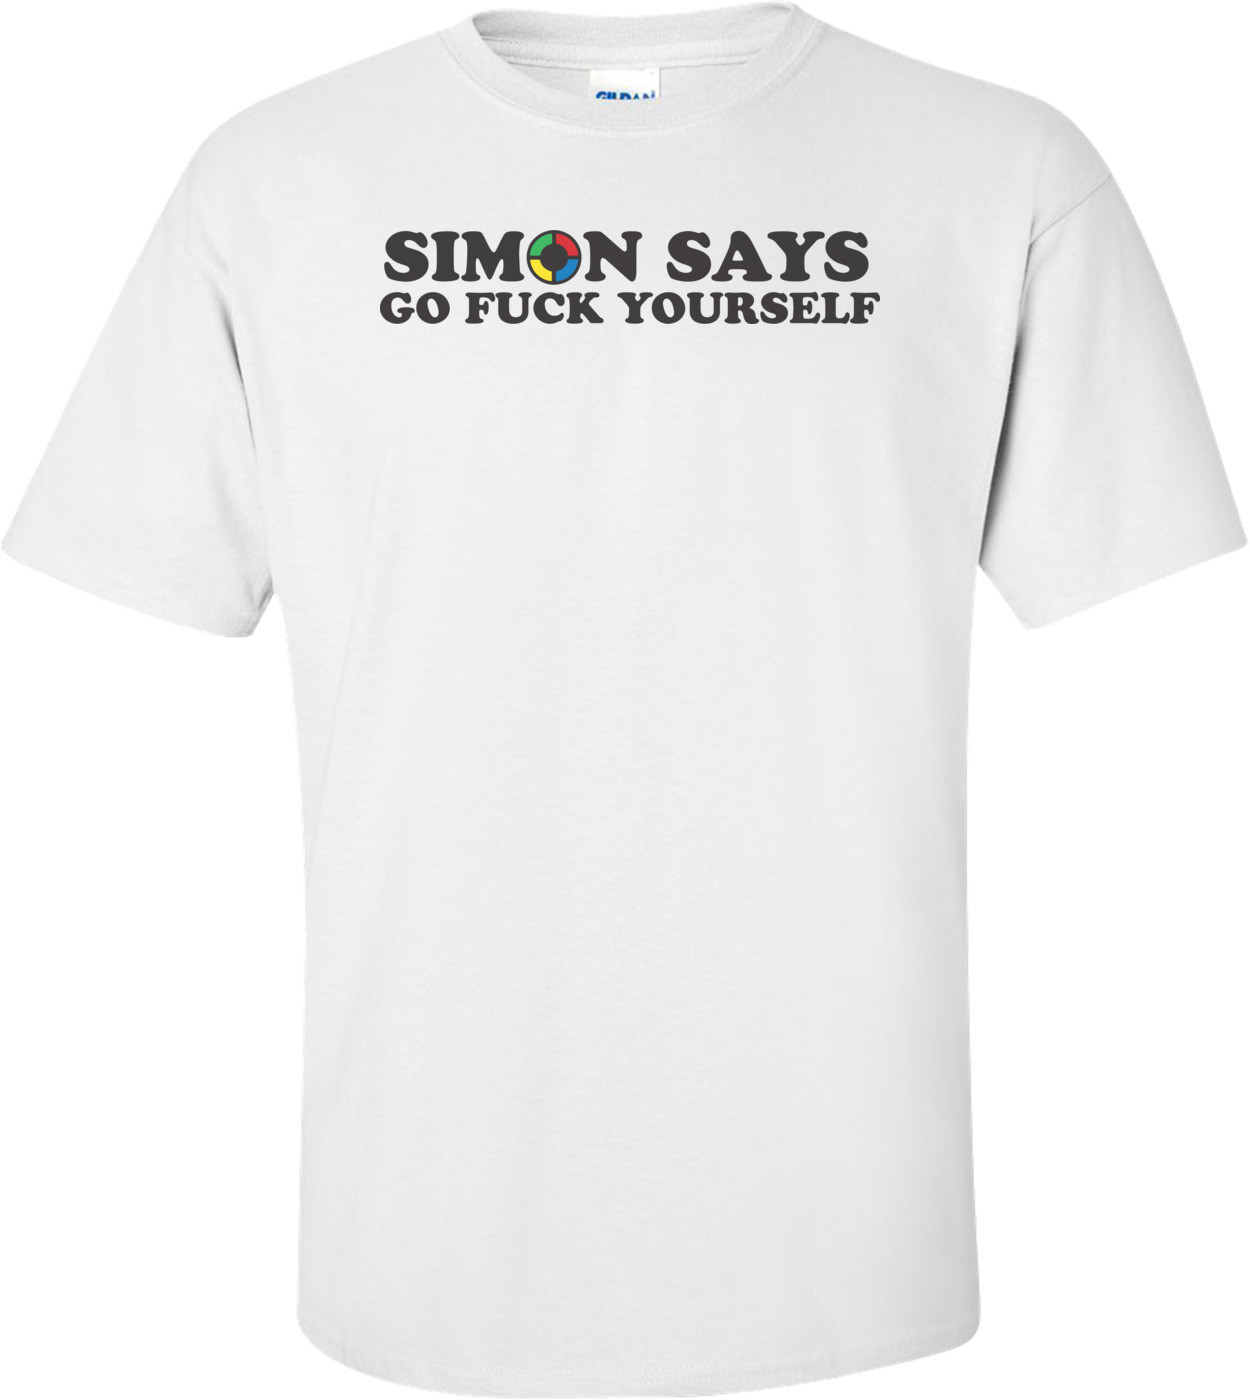 Simon Says Go Fuck Yourself